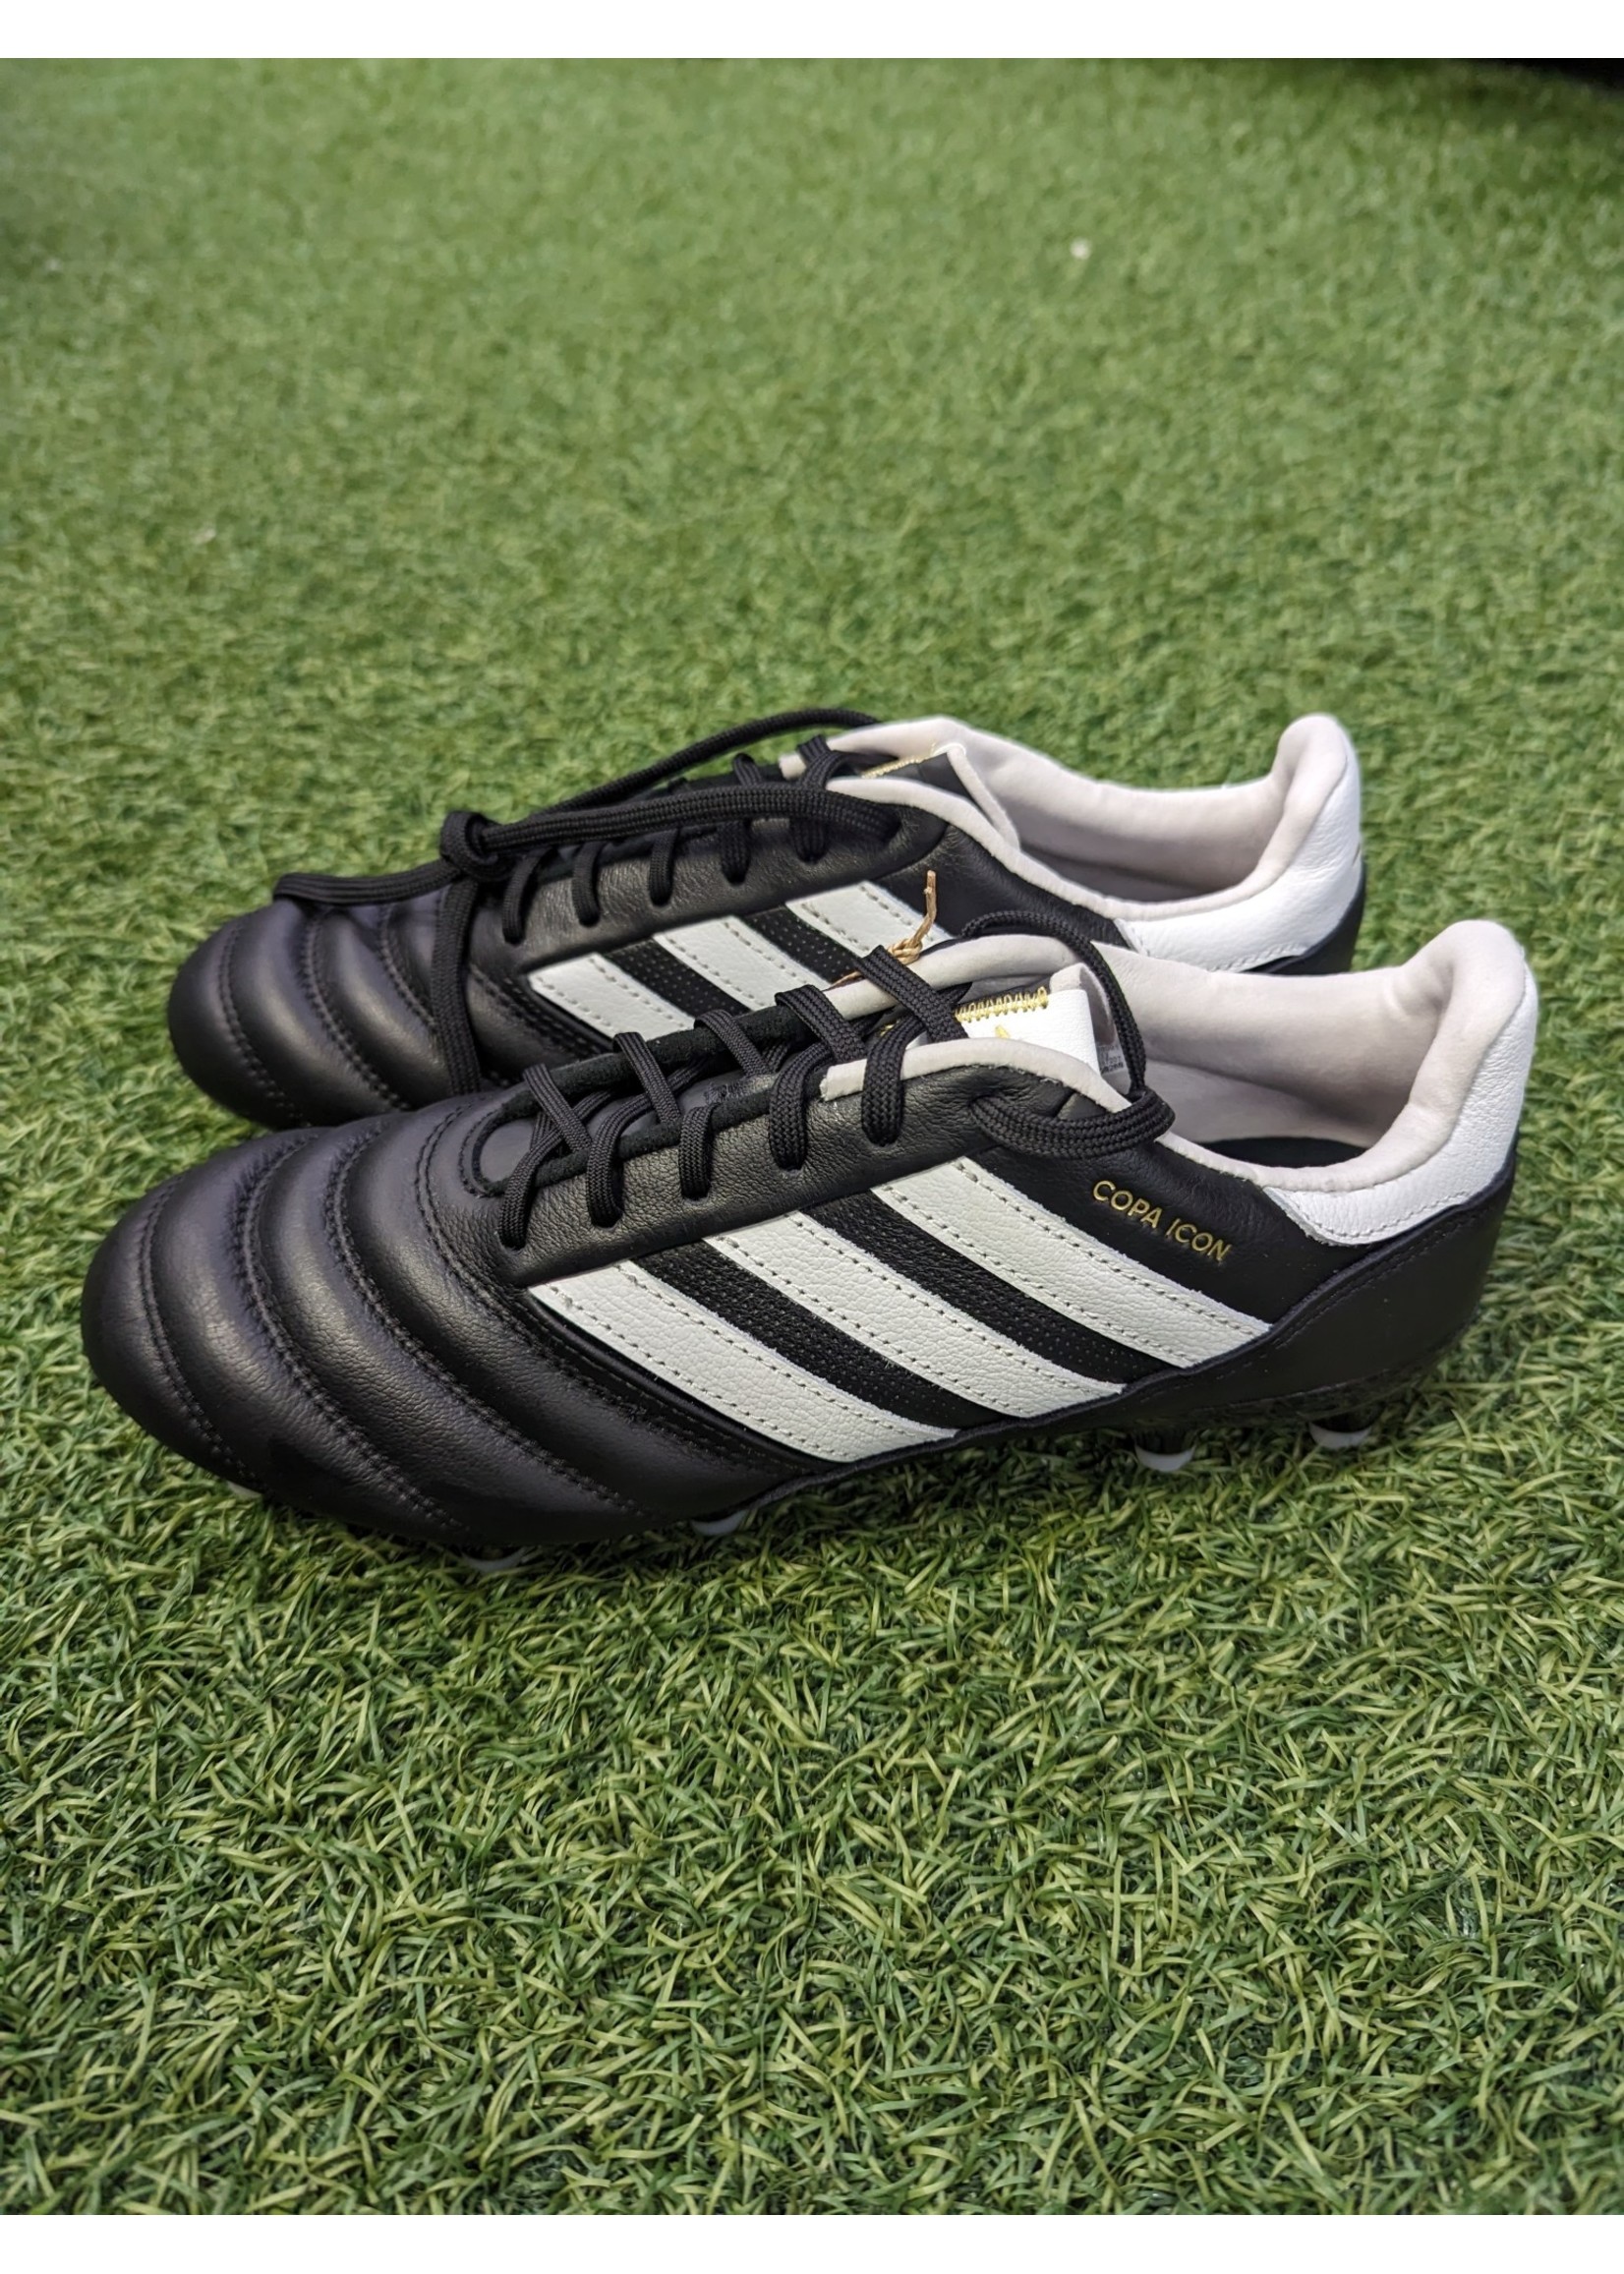 Adidas Copa Icon FG - Size 7